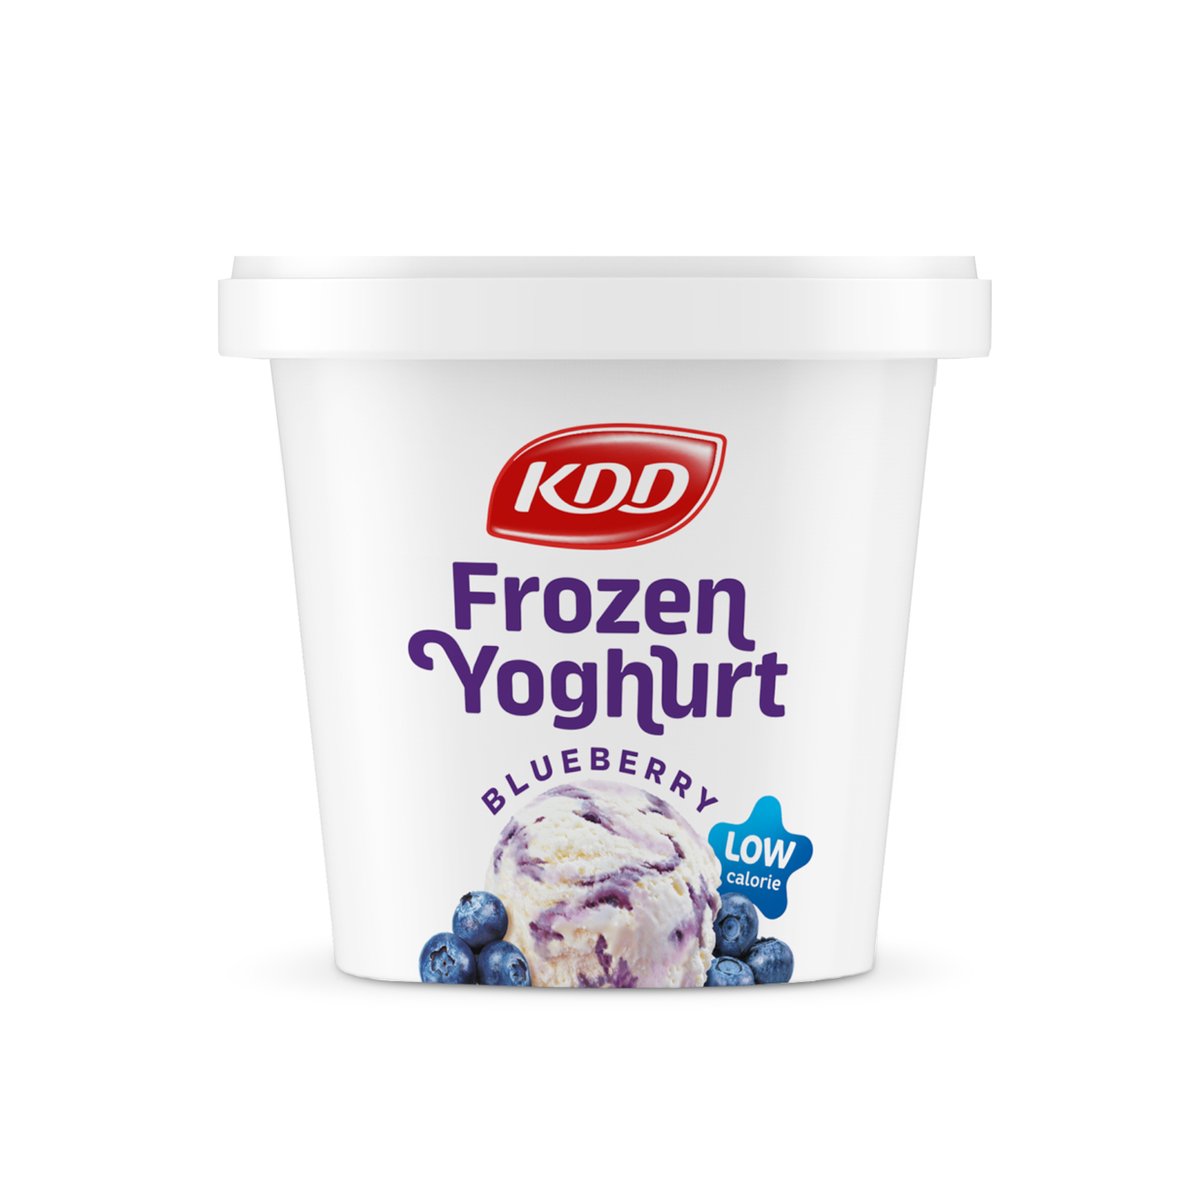 KDD Frozen Yoghurt Blueberry 500ml